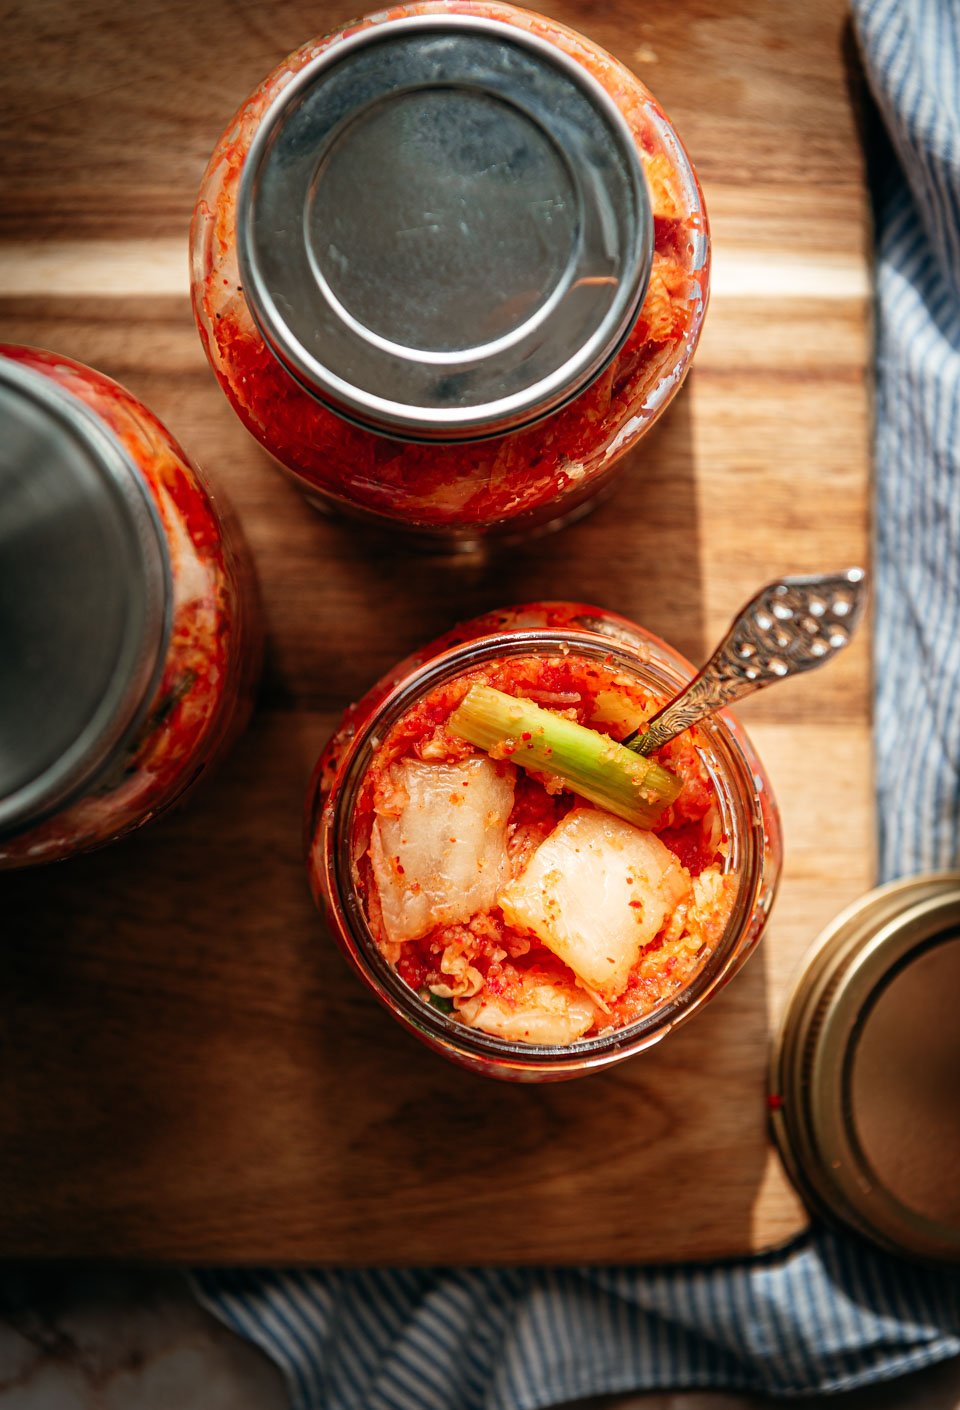 Kimchi recept